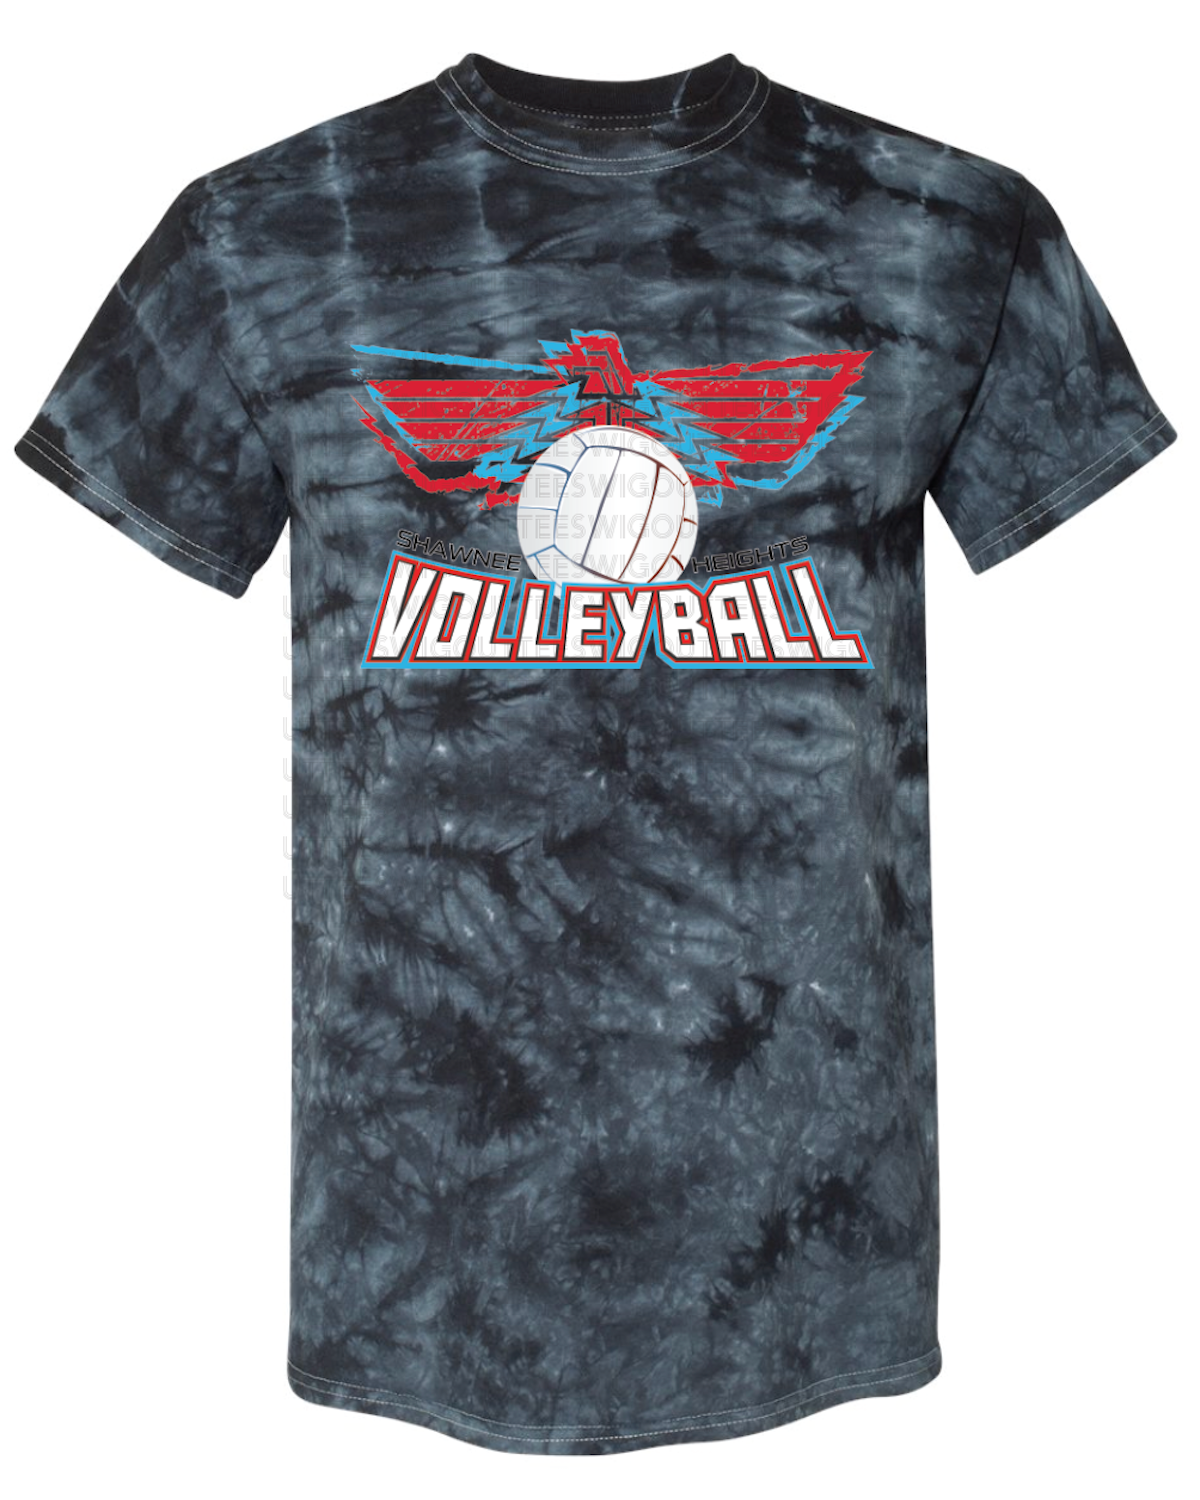 Shawnee Heights Volleyball Crystal Tie Dye T-shirt